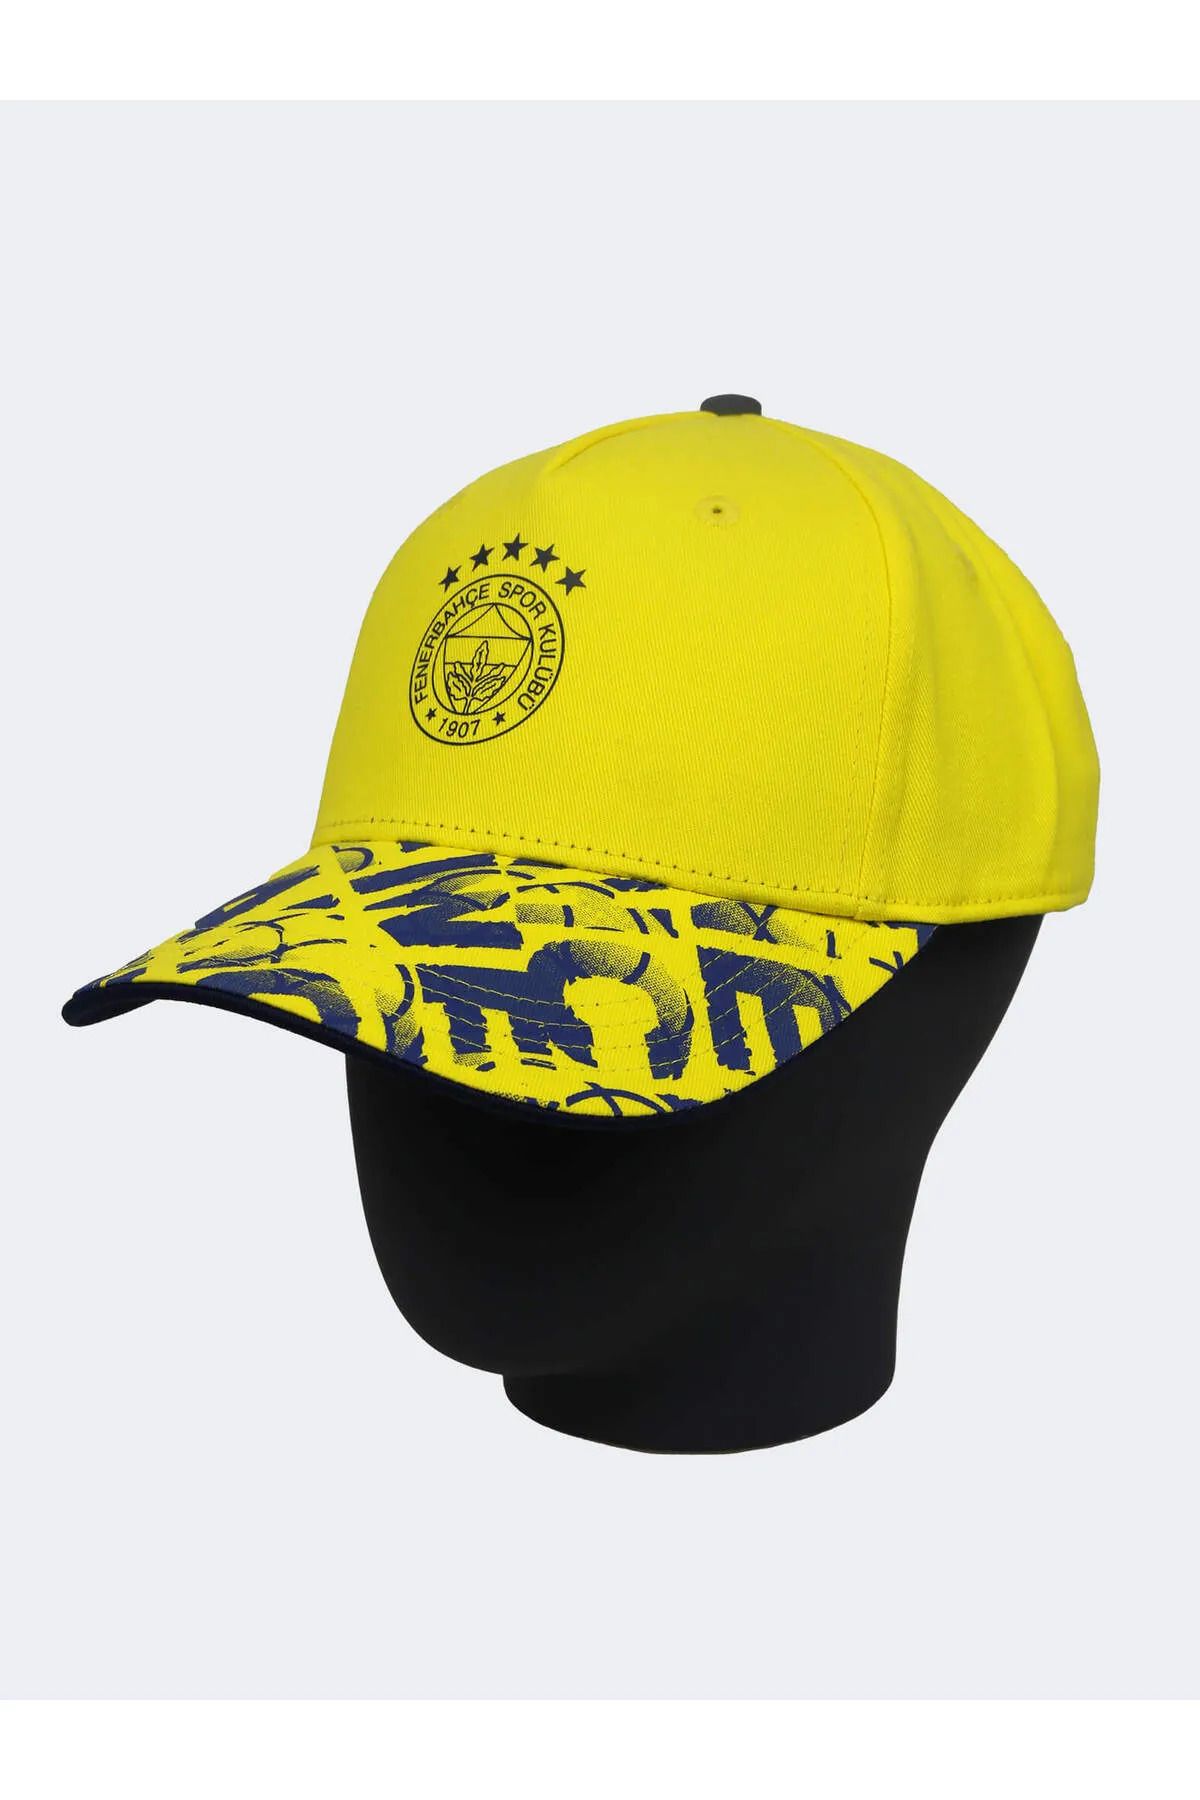 Puma Fenerbahçe S.K. Unisex Şapka Sarı Lacivert